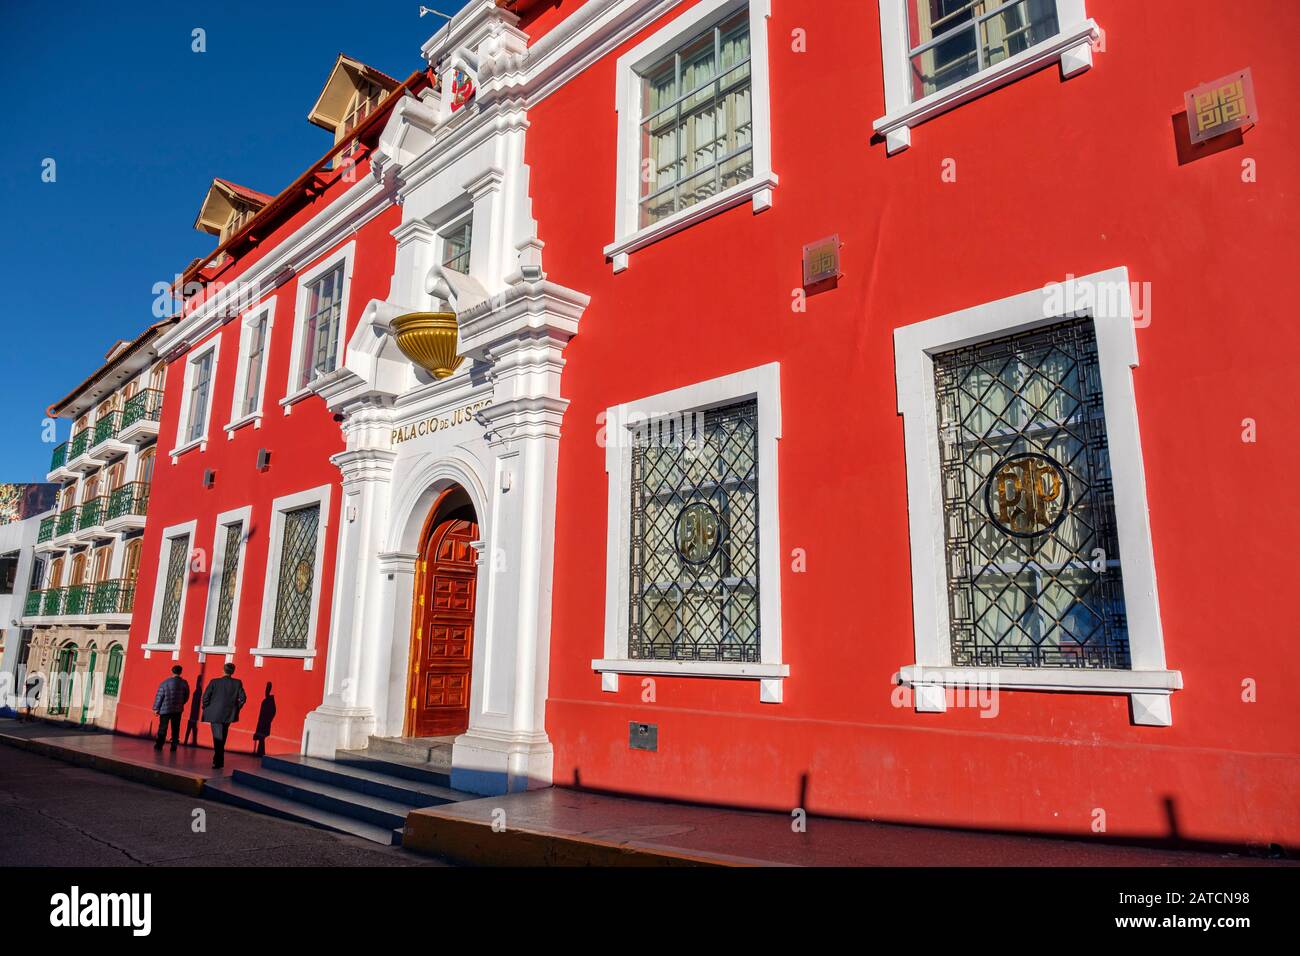 Palacio de Justicia Puno facade, Puno Courthouse, Corte Superior de Justicia de Puno, Plaza de Armas Puno, Peru Stock Photo